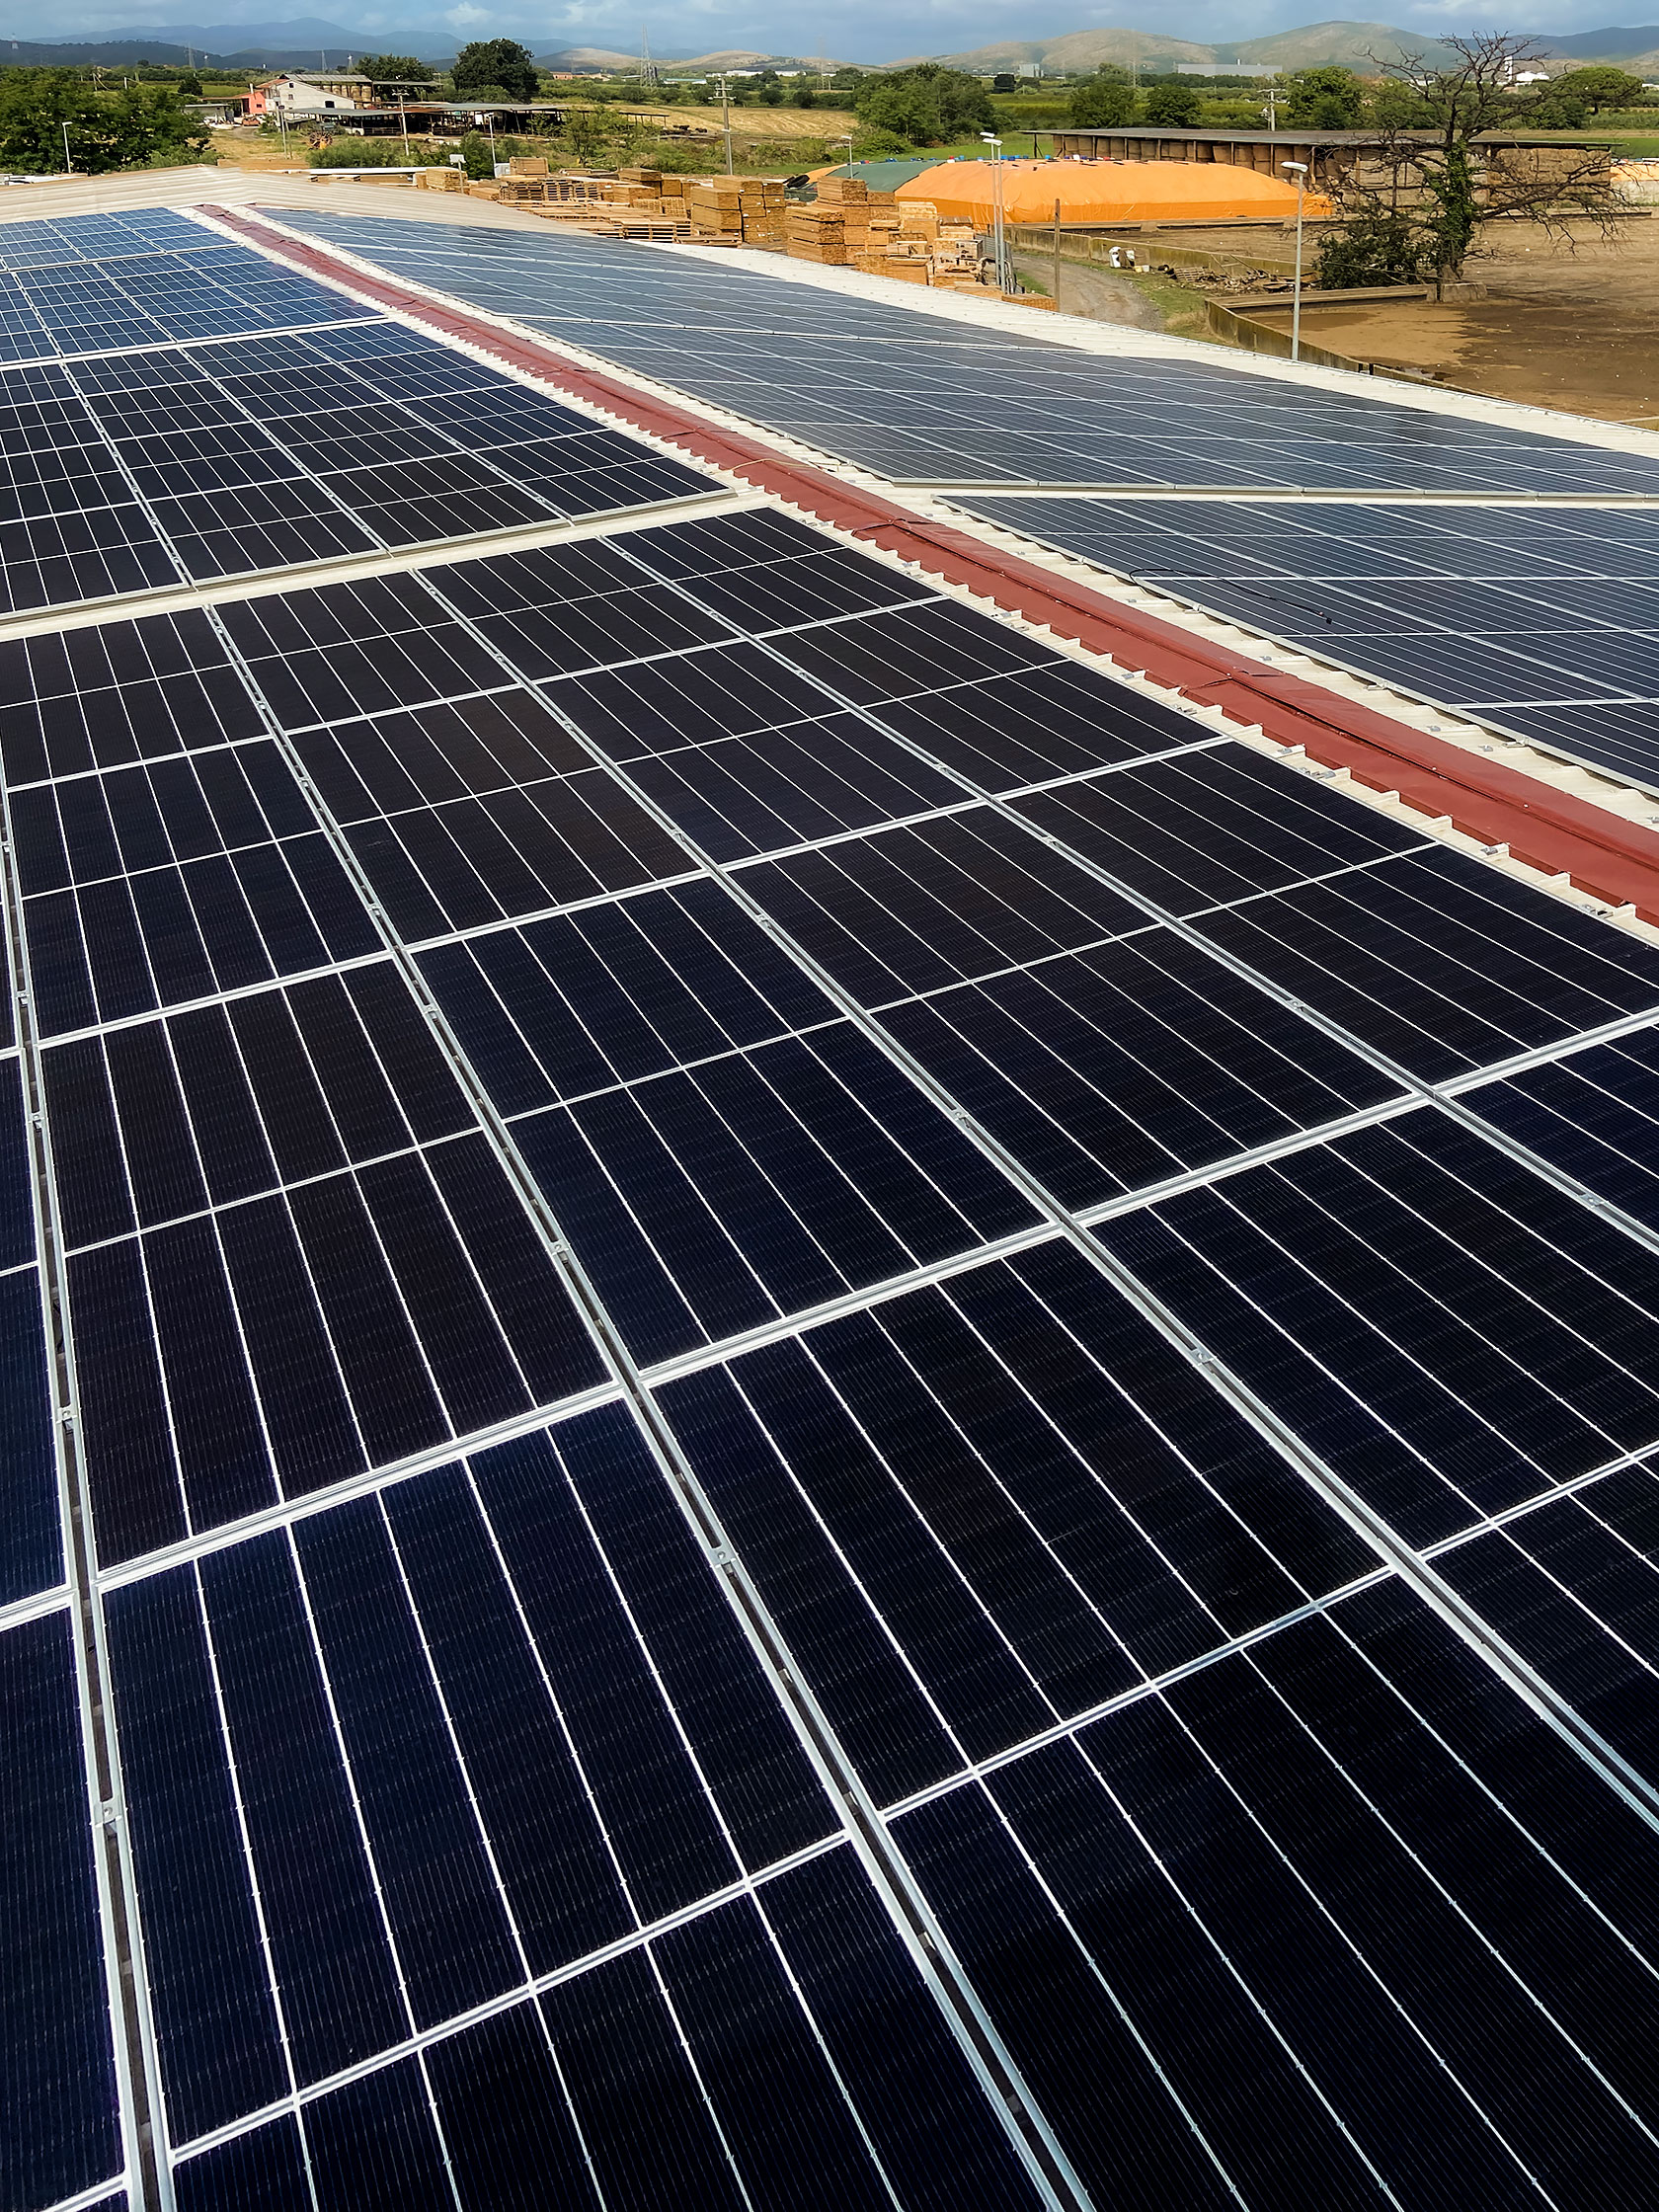 Impianto Fotovoltaico 117 kWp Pastorano, Caserta DMT Solar installatore certificato Tesla Powerwall e Sunpower Maxeon impianto fotovoltaico in Campania